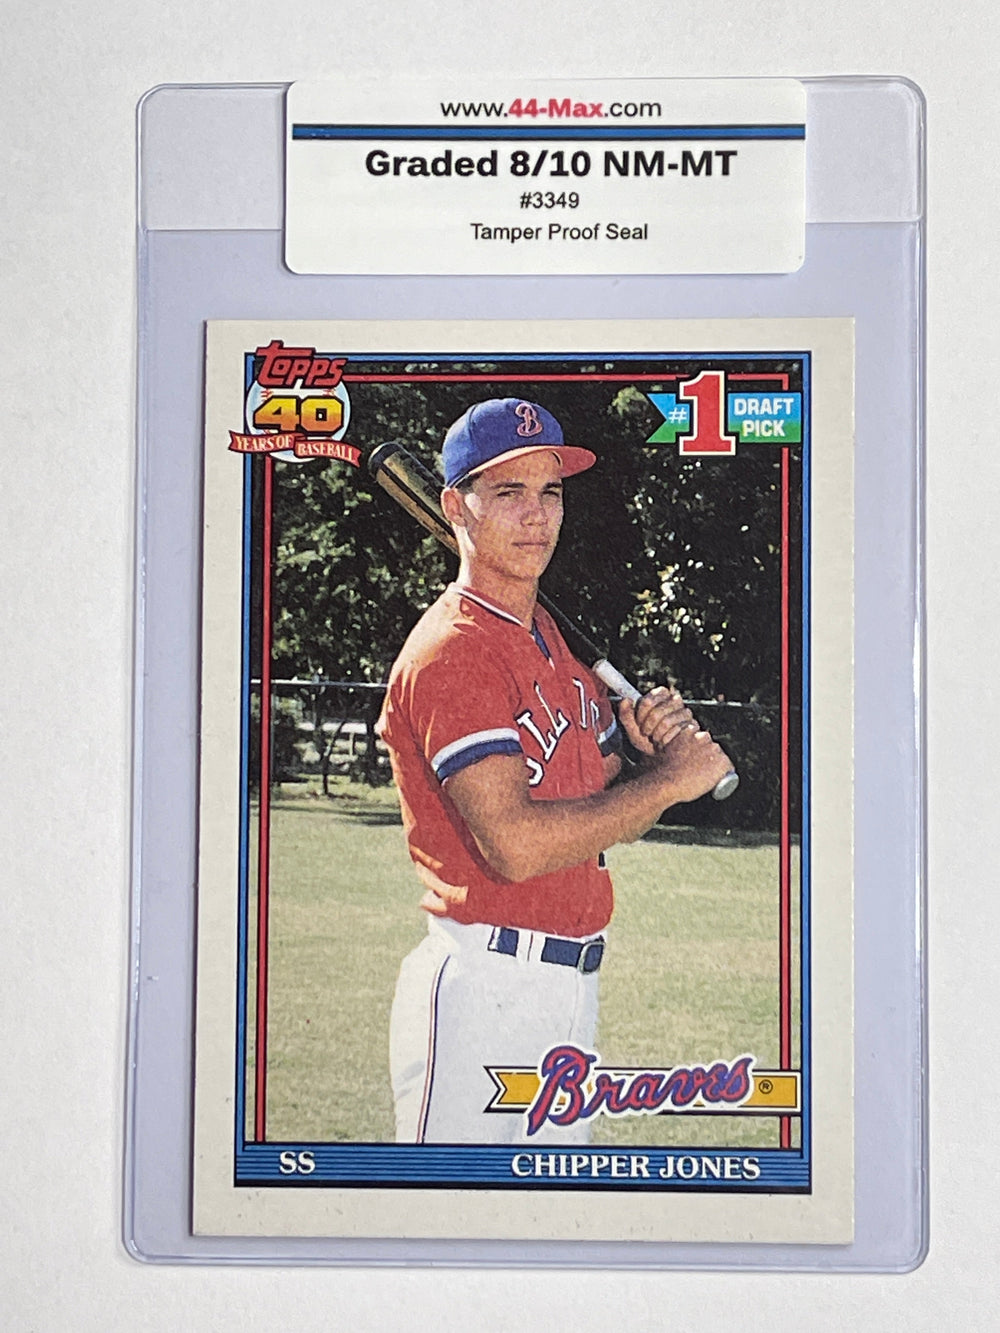 Chipper Jones 1991 Topps RC Baseball Card. 44-Max 8/10 NM-MT #3352